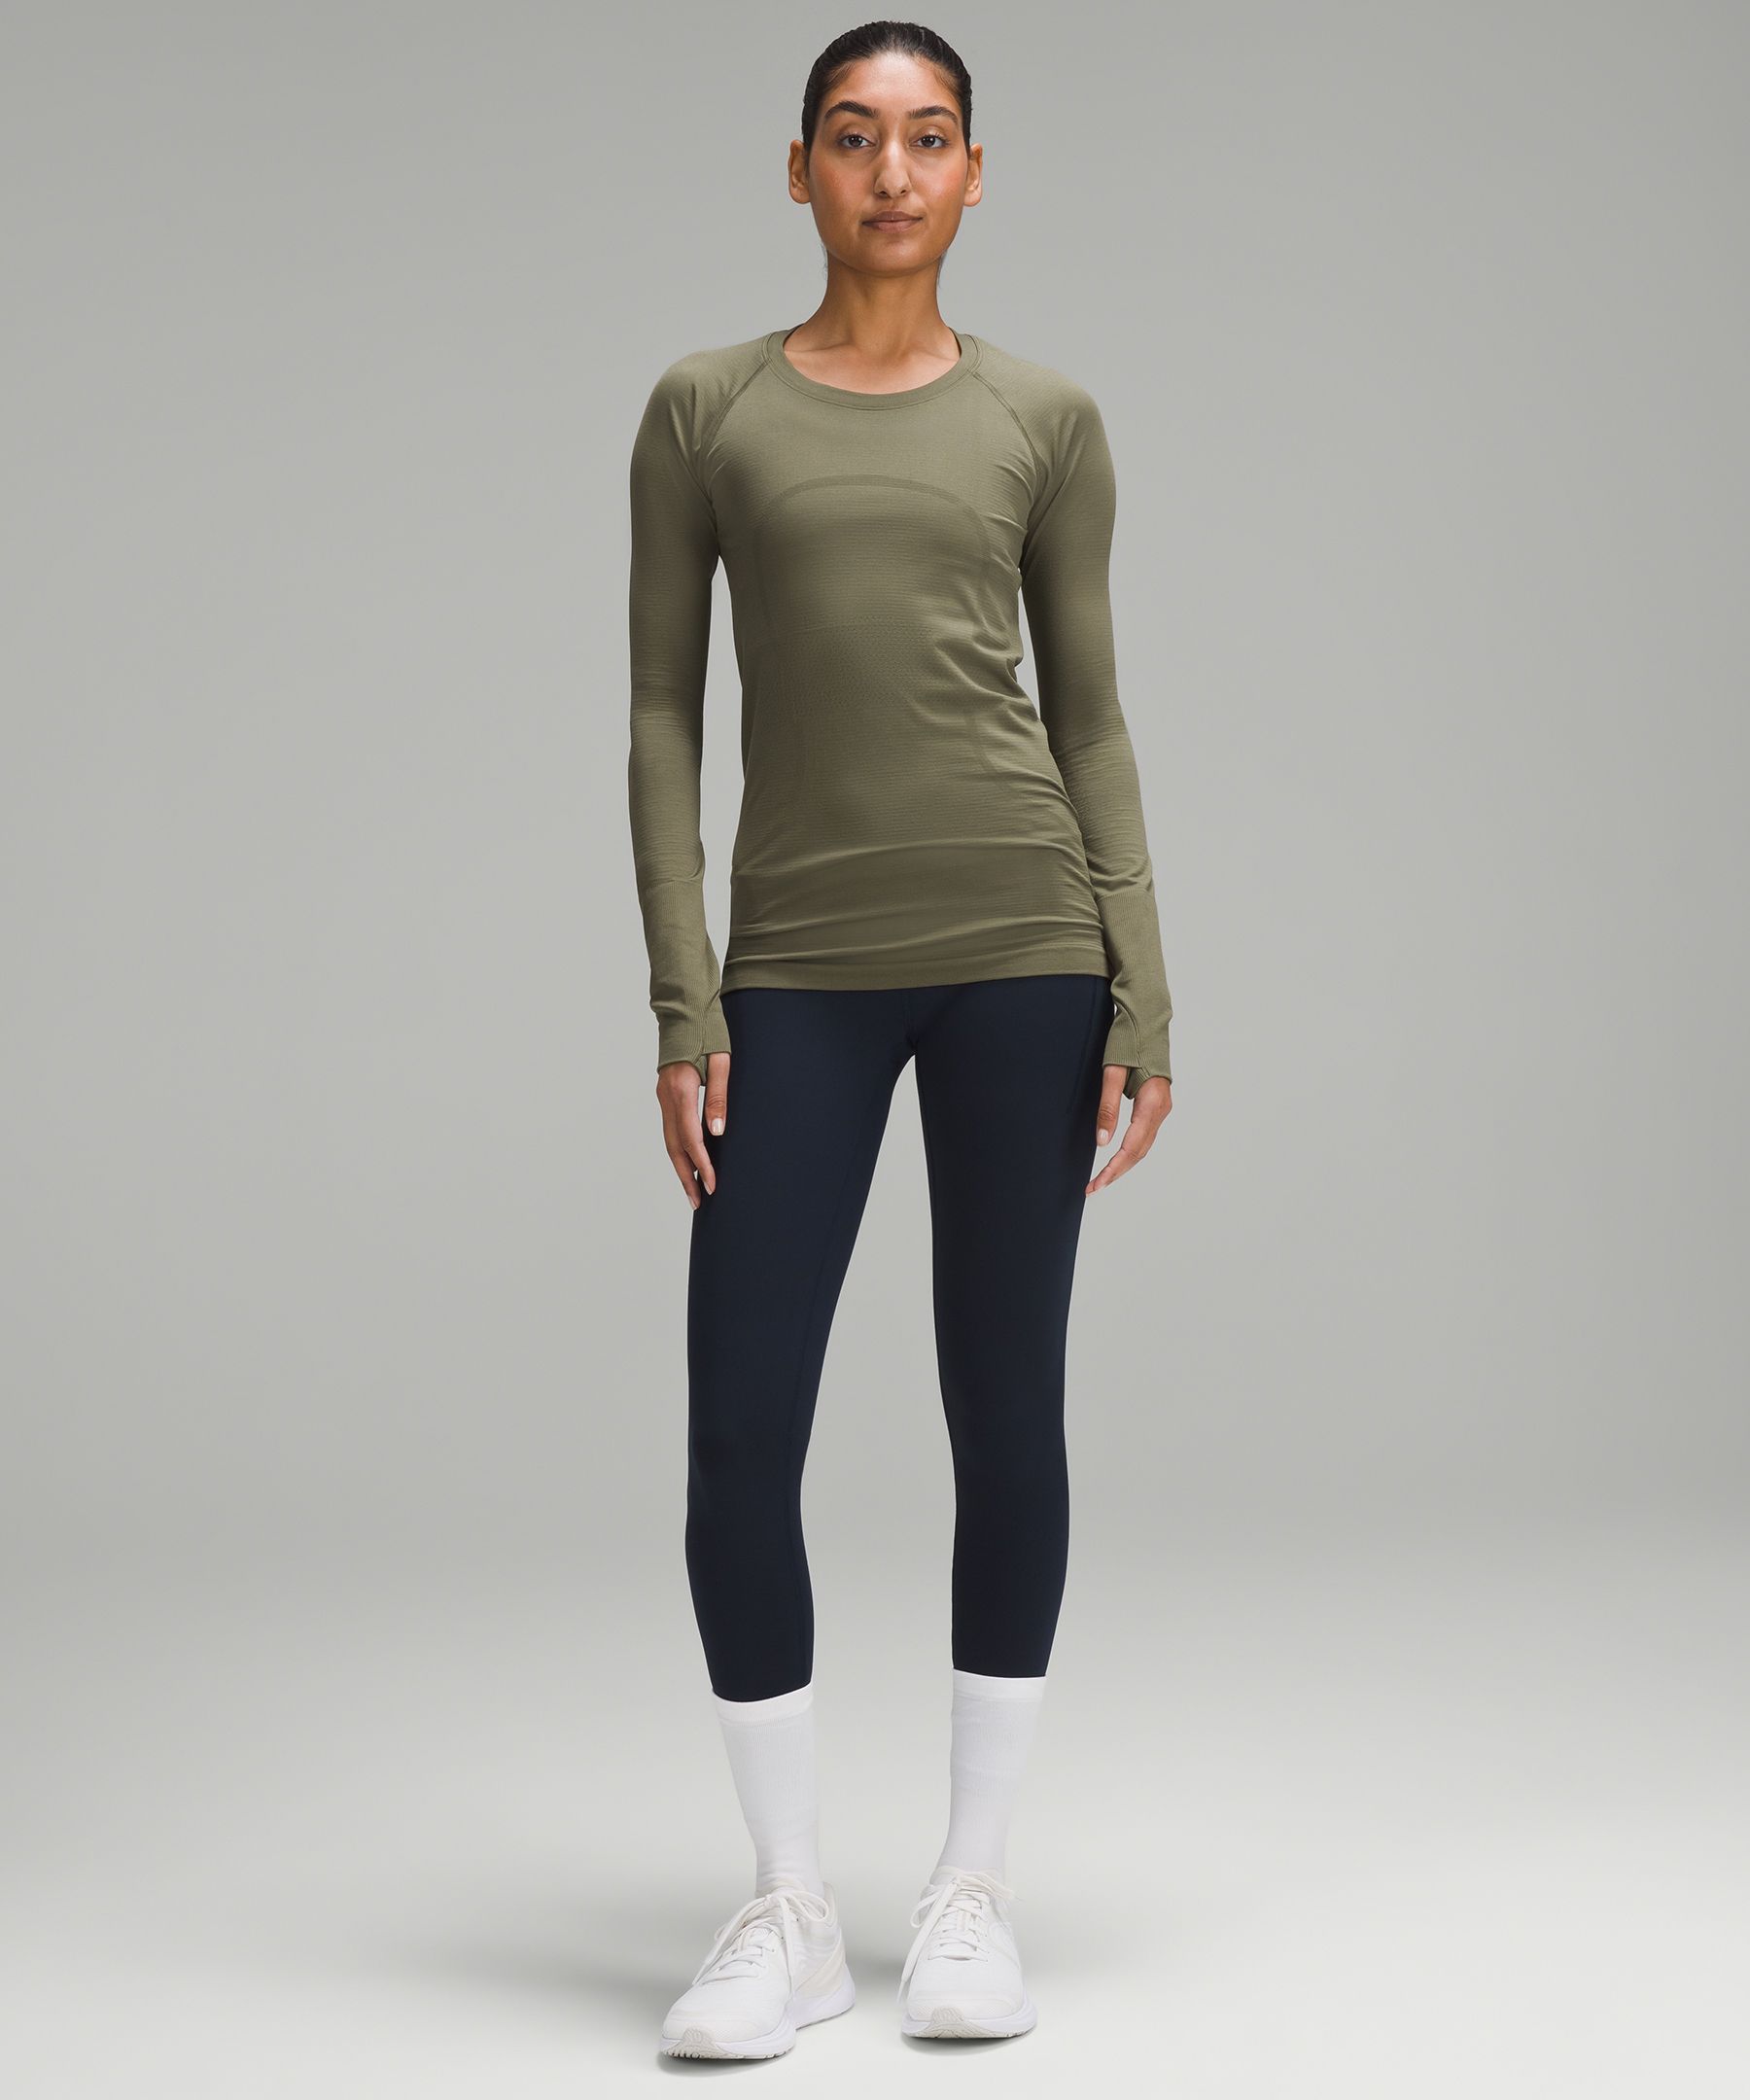 Lululemon athletica Swiftly Tech Long-Sleeve Shirt 2.0